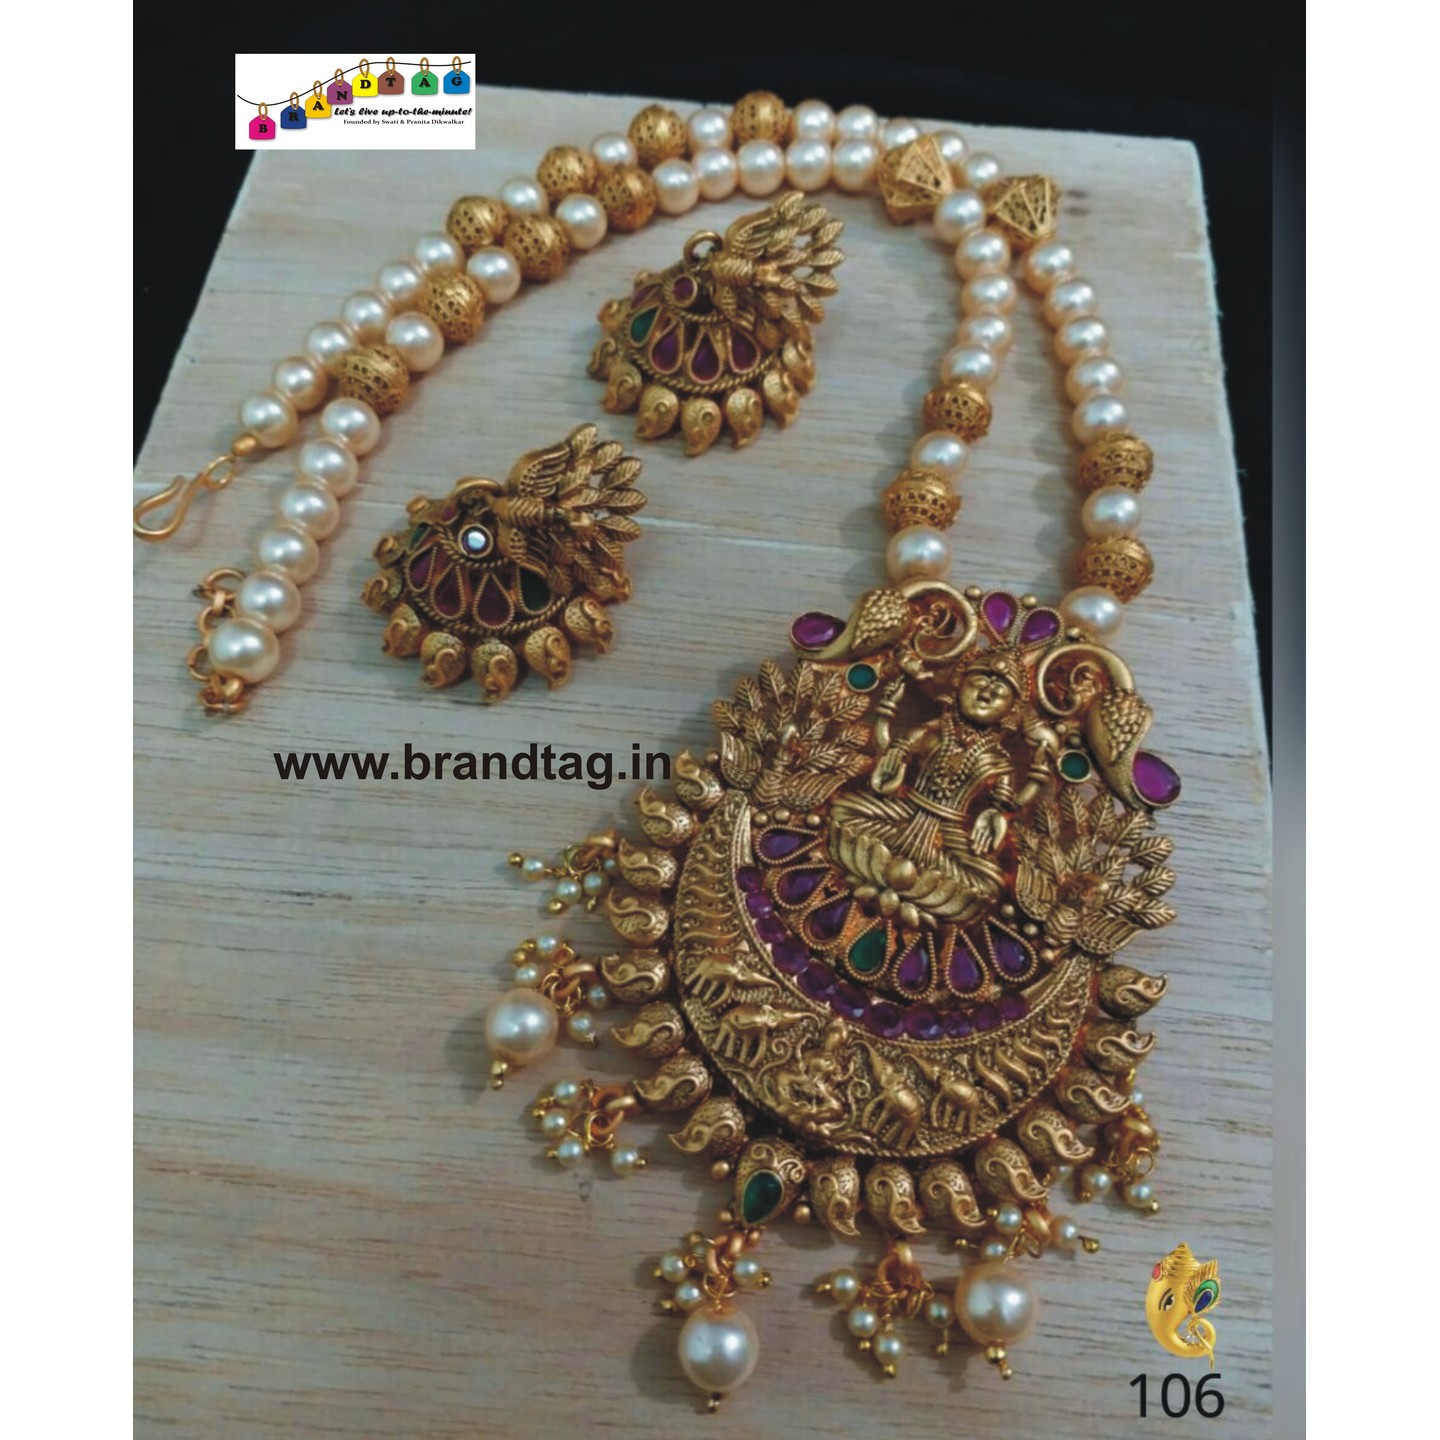 Exquisite Baahubali Chandrakor Long Necklace Set!!!